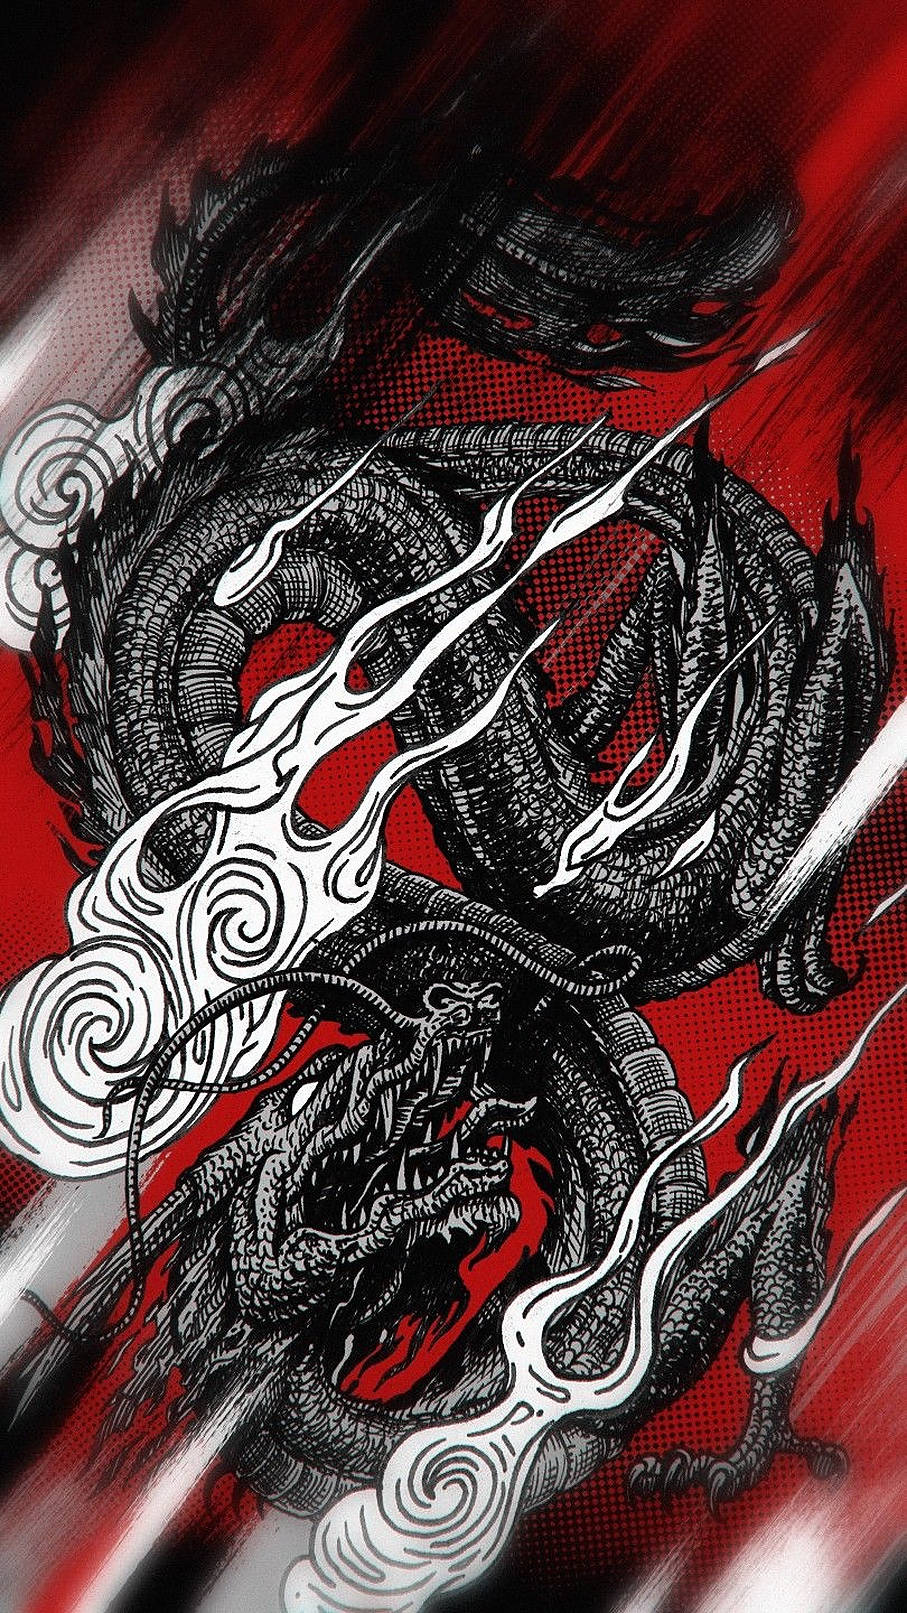 Black Dragon made by Eiji at Muscat Tattoo. Tokyo : r/tattoos